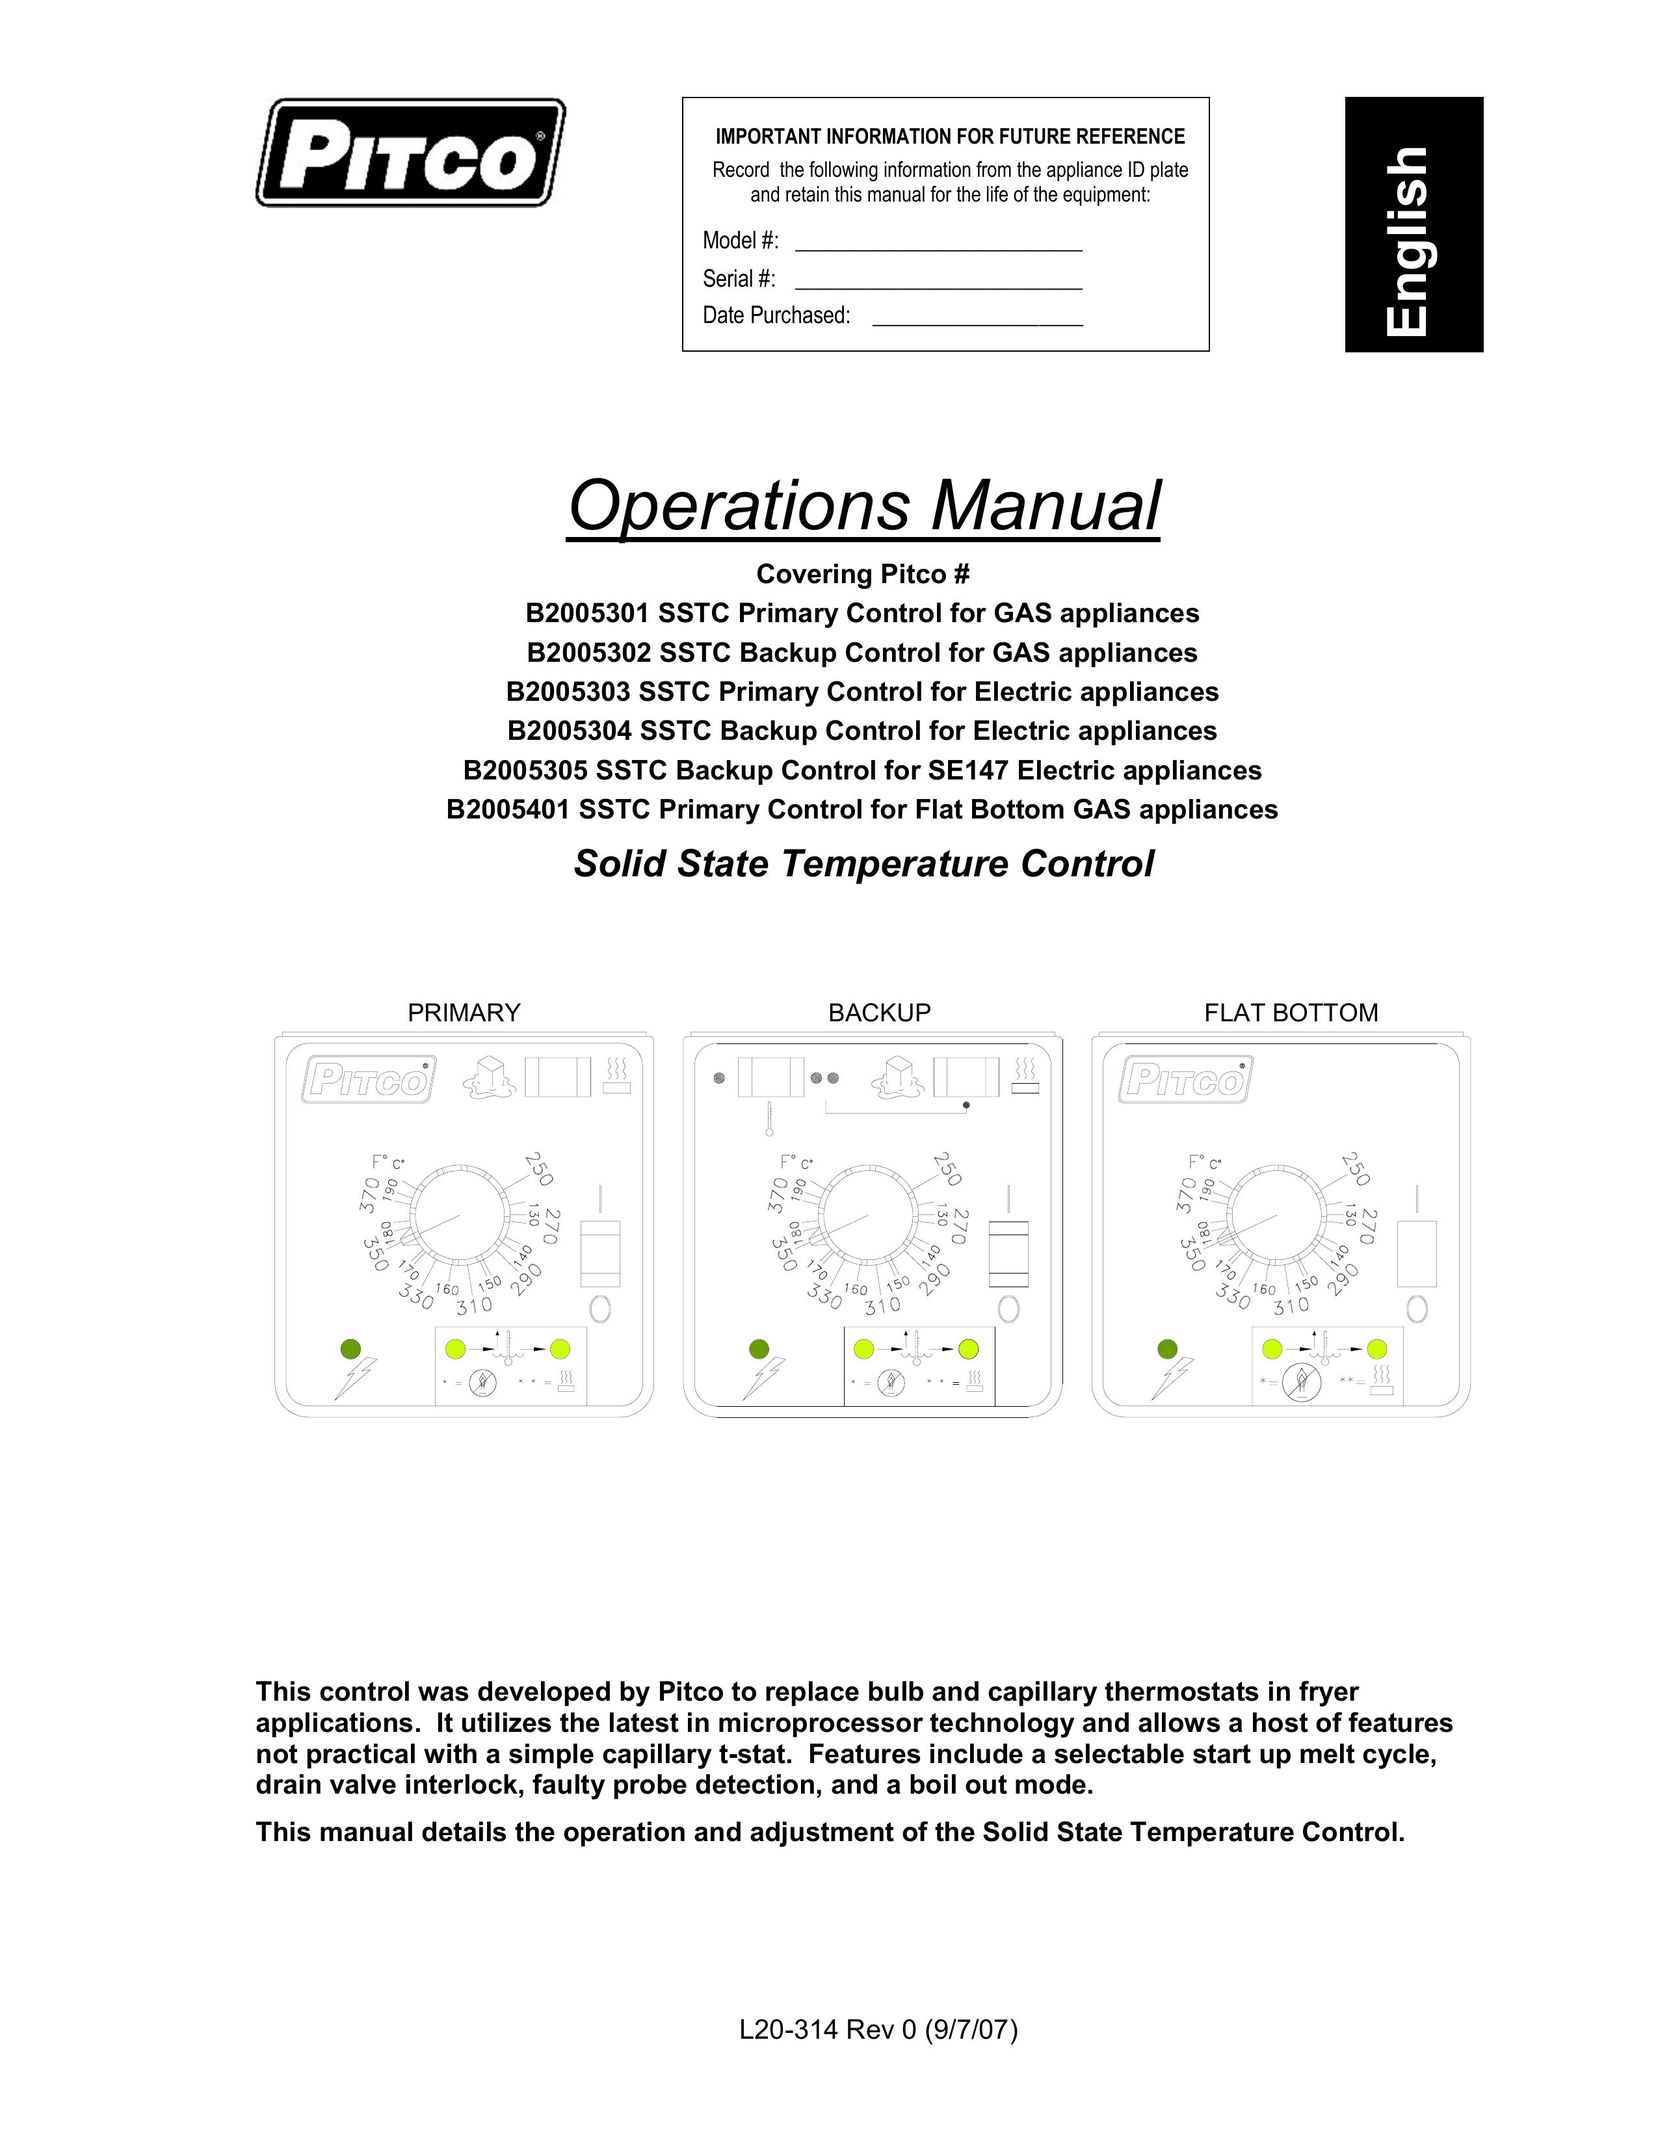 Pitco Frialator B2005401 SSTC Thermostat User Manual